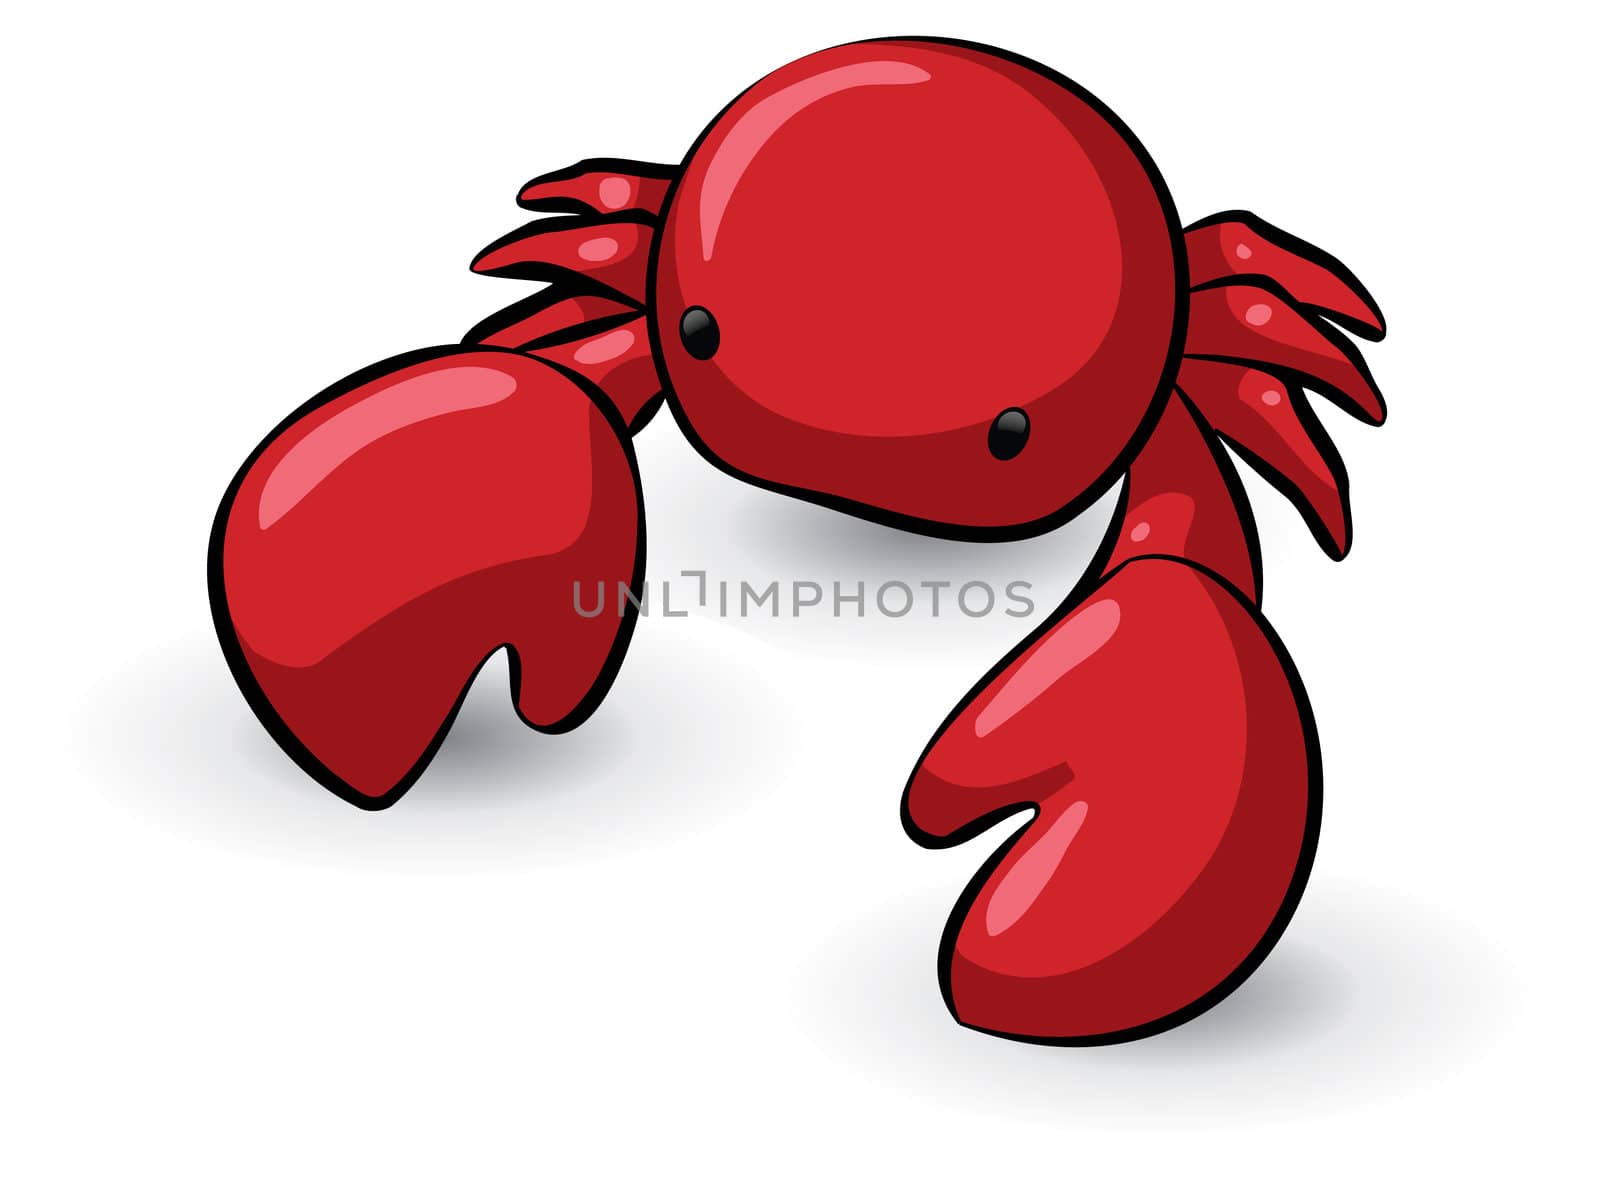 A cute red crab good as a menue or food presentation design element.